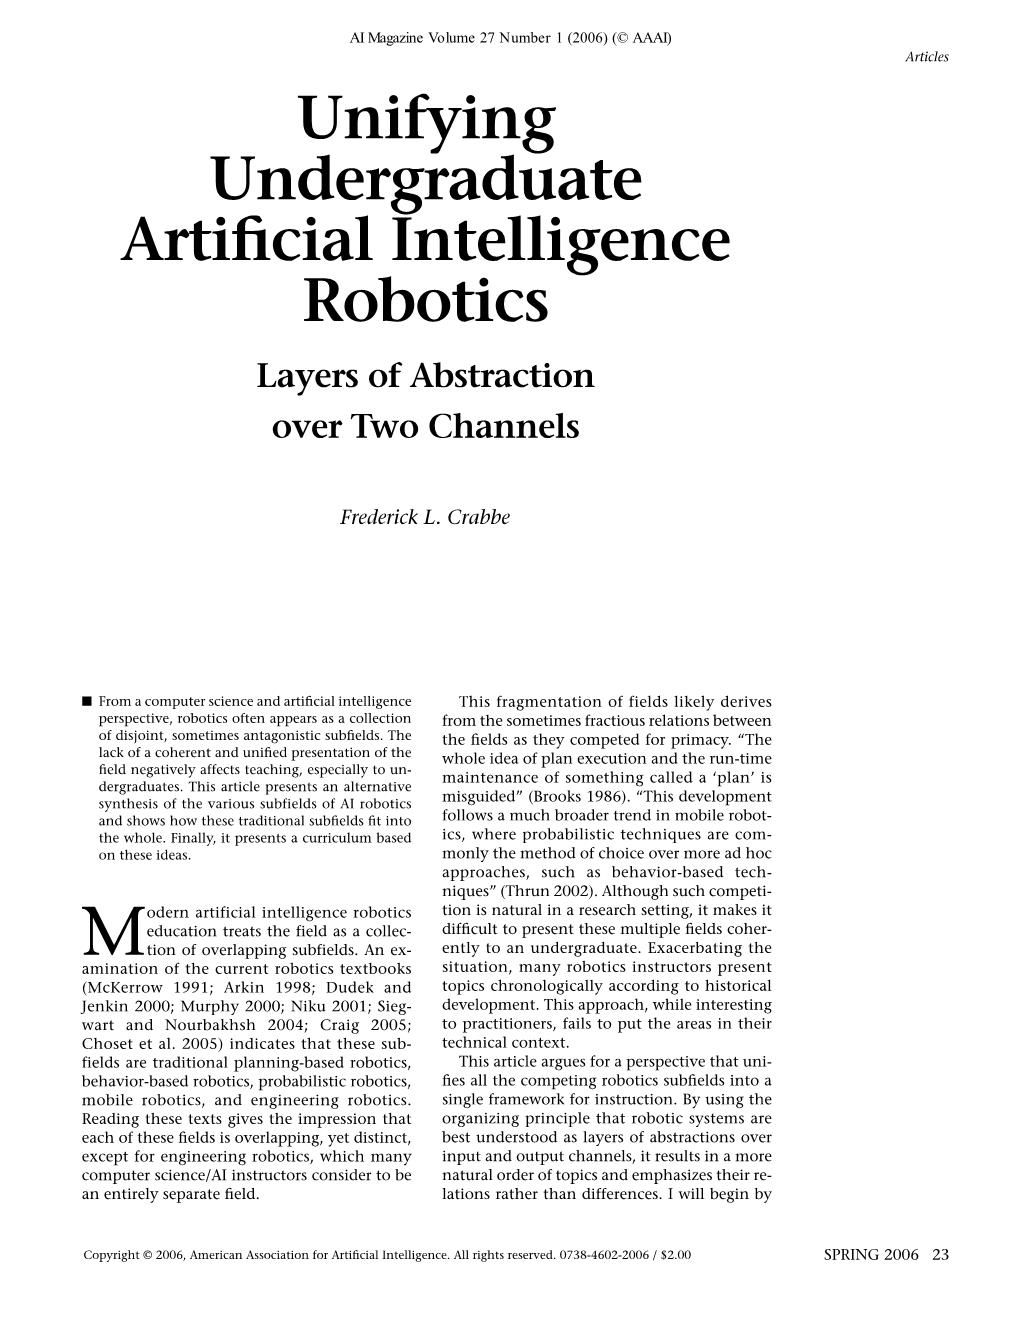 Unifying Undergraduate Artificial Intelligence